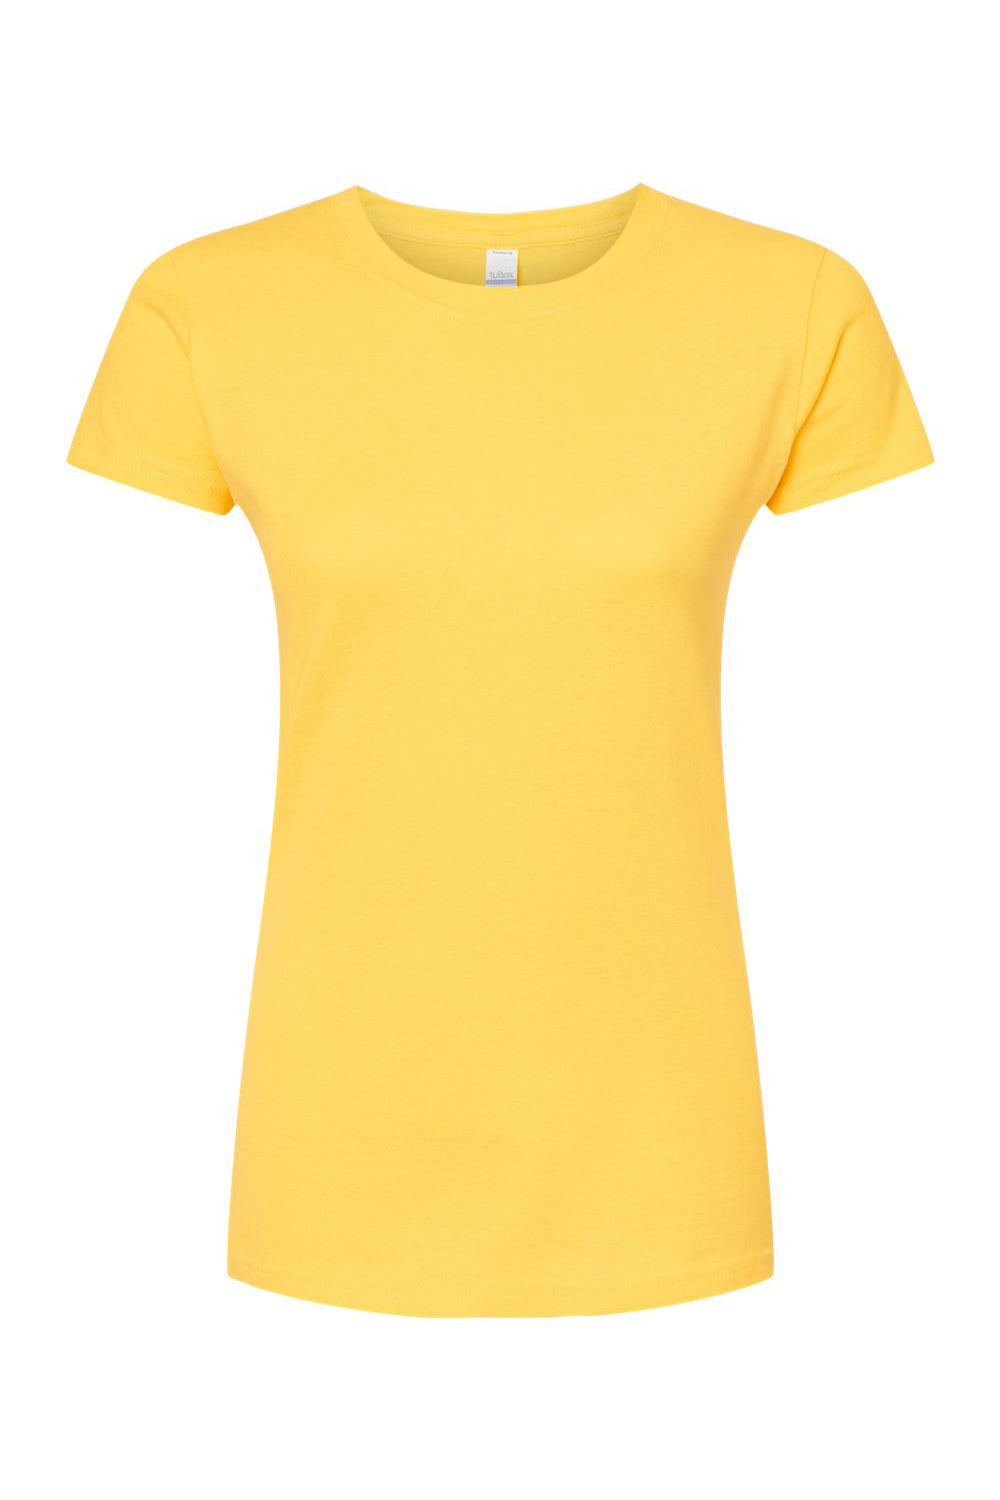 Tultex 213 Womens Fine Jersey Slim Fit Short Sleeve Crewneck T-Shirt Sunshine Yellow Flat Front